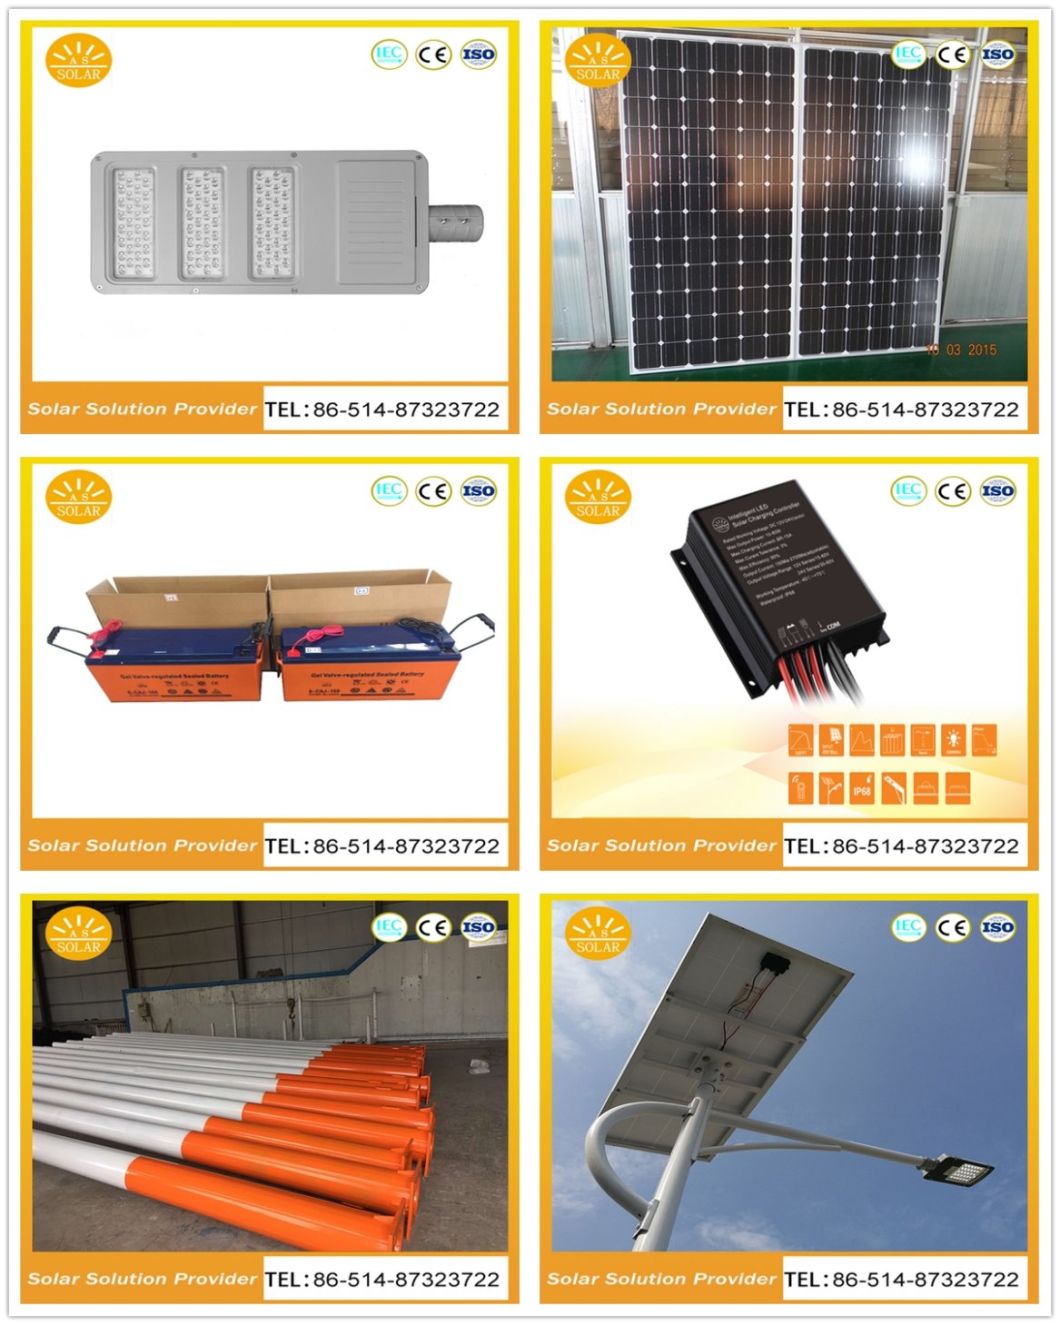 China Manufacturer Wholesale Good Reputation LED Street Light Solar